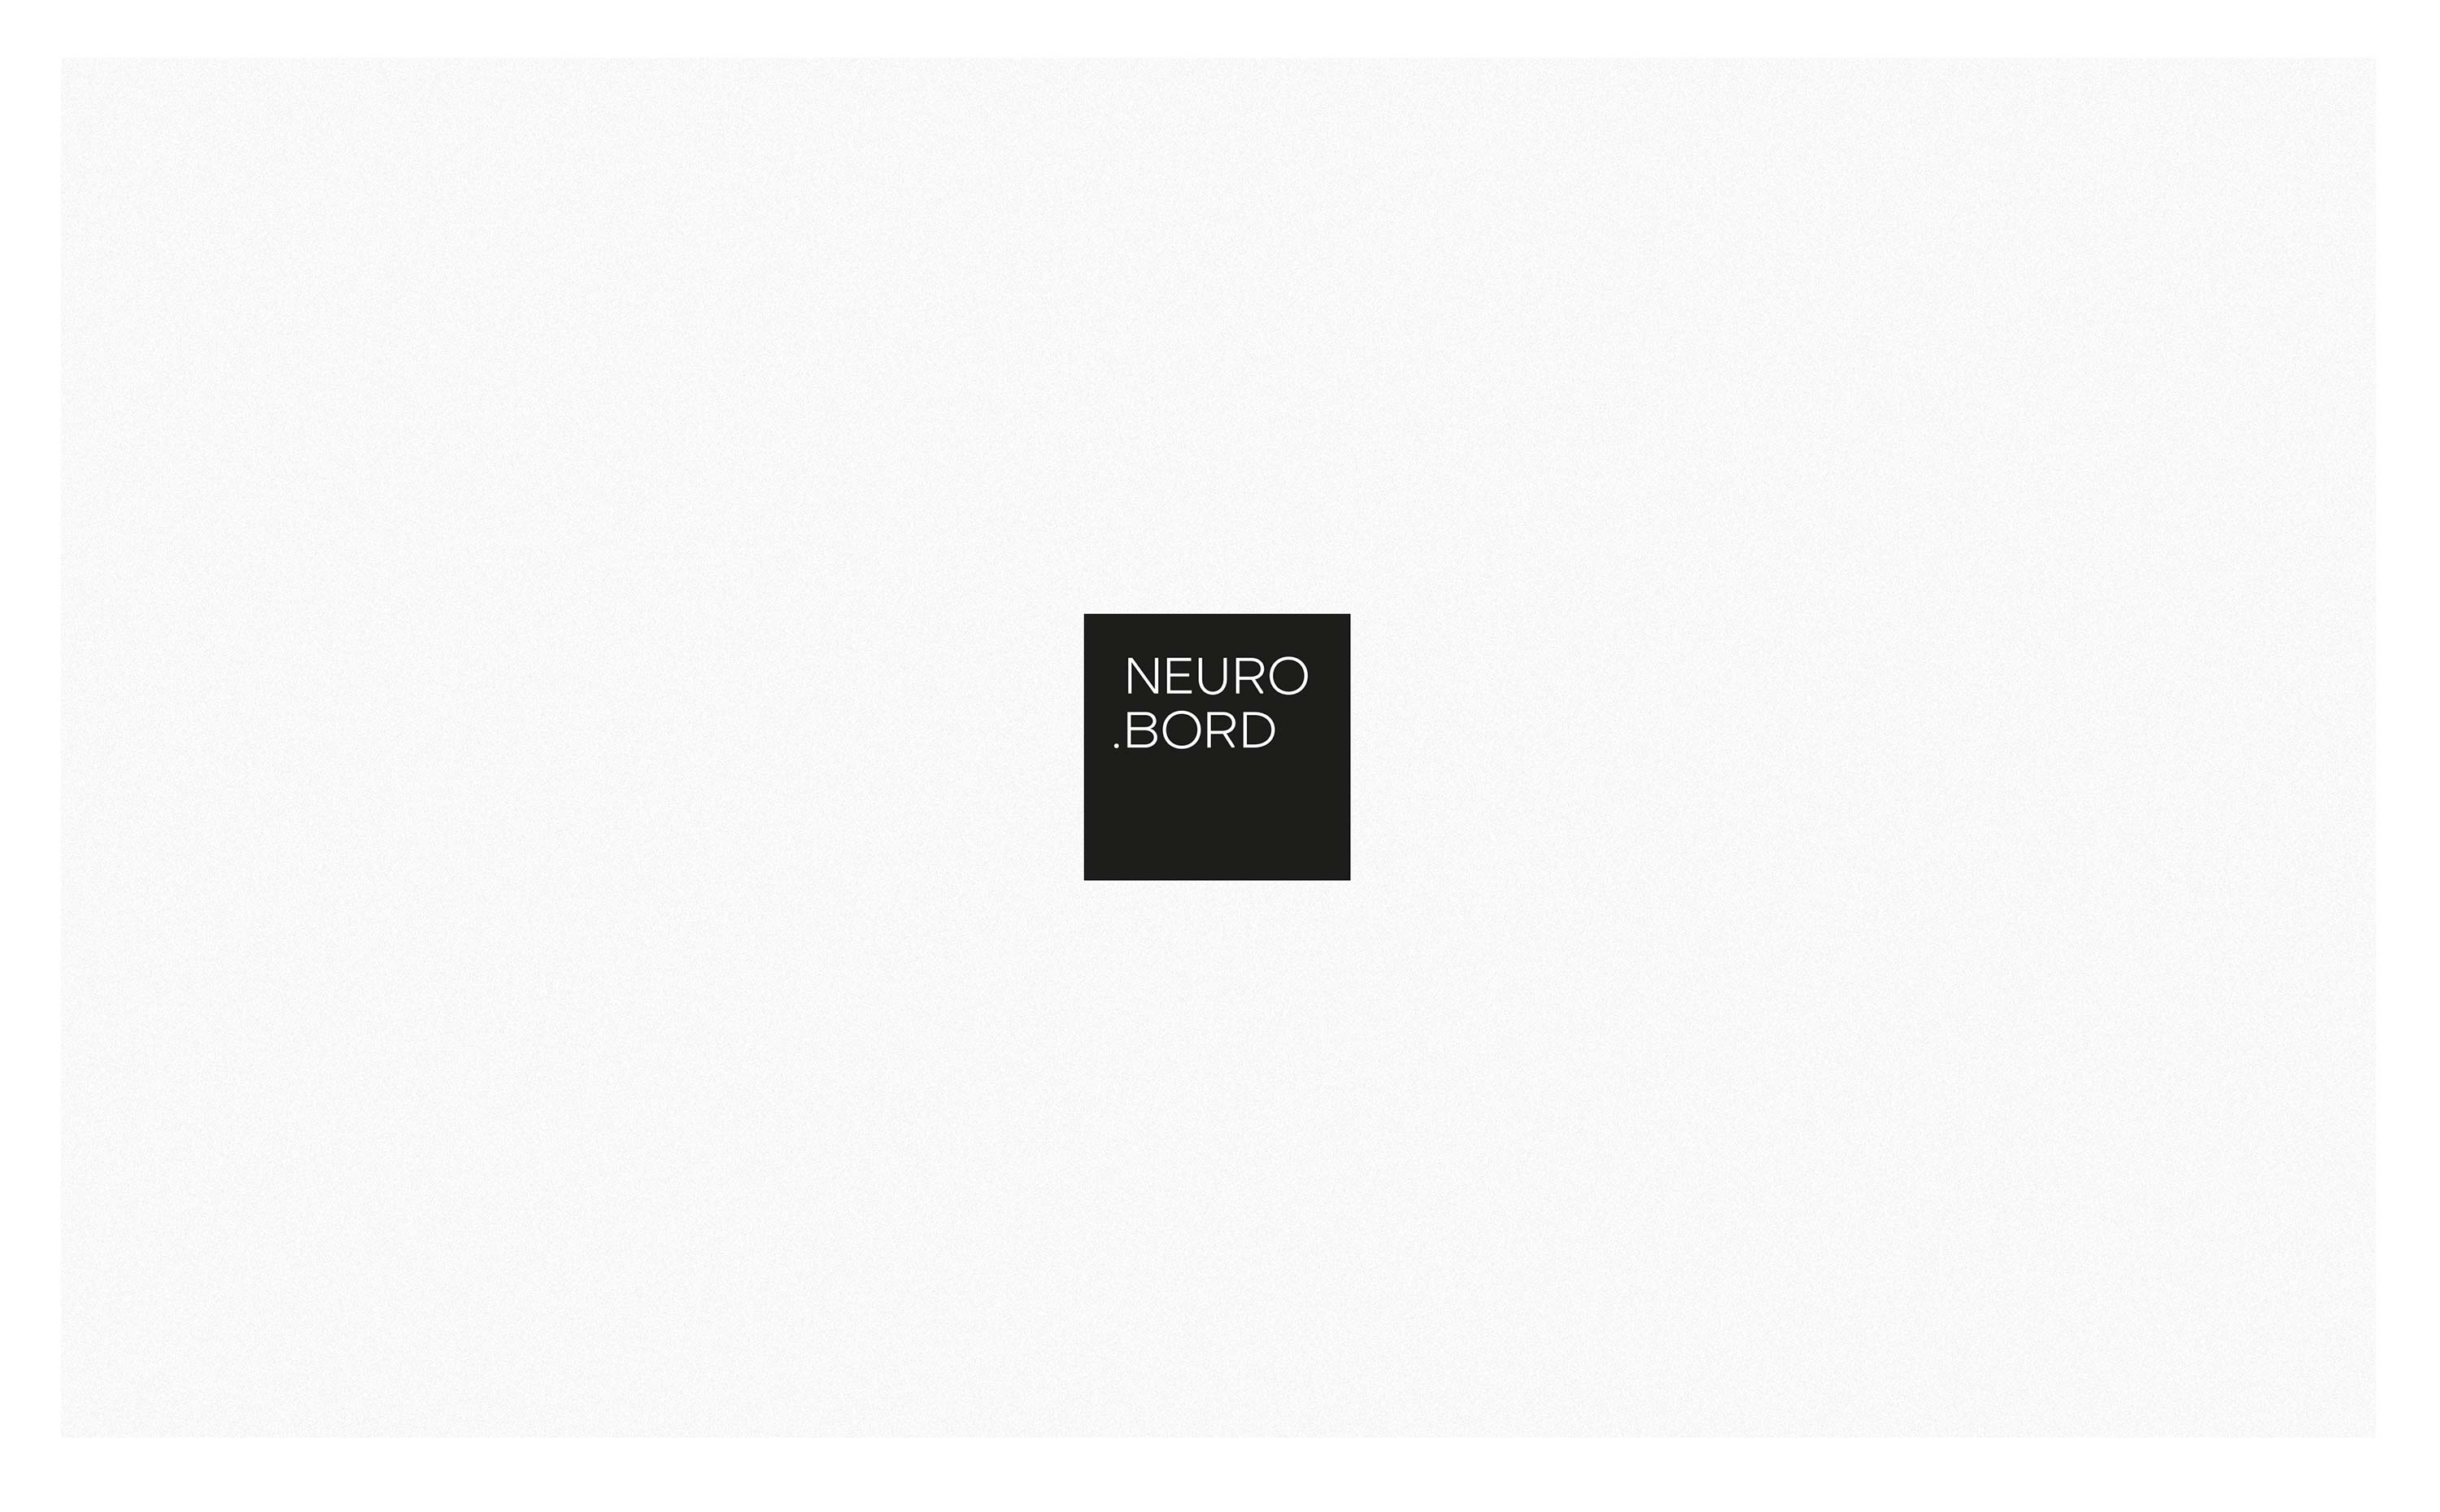 blockundstift-branding-webdesign-neuro-bord-corporate-design-website-logo-20